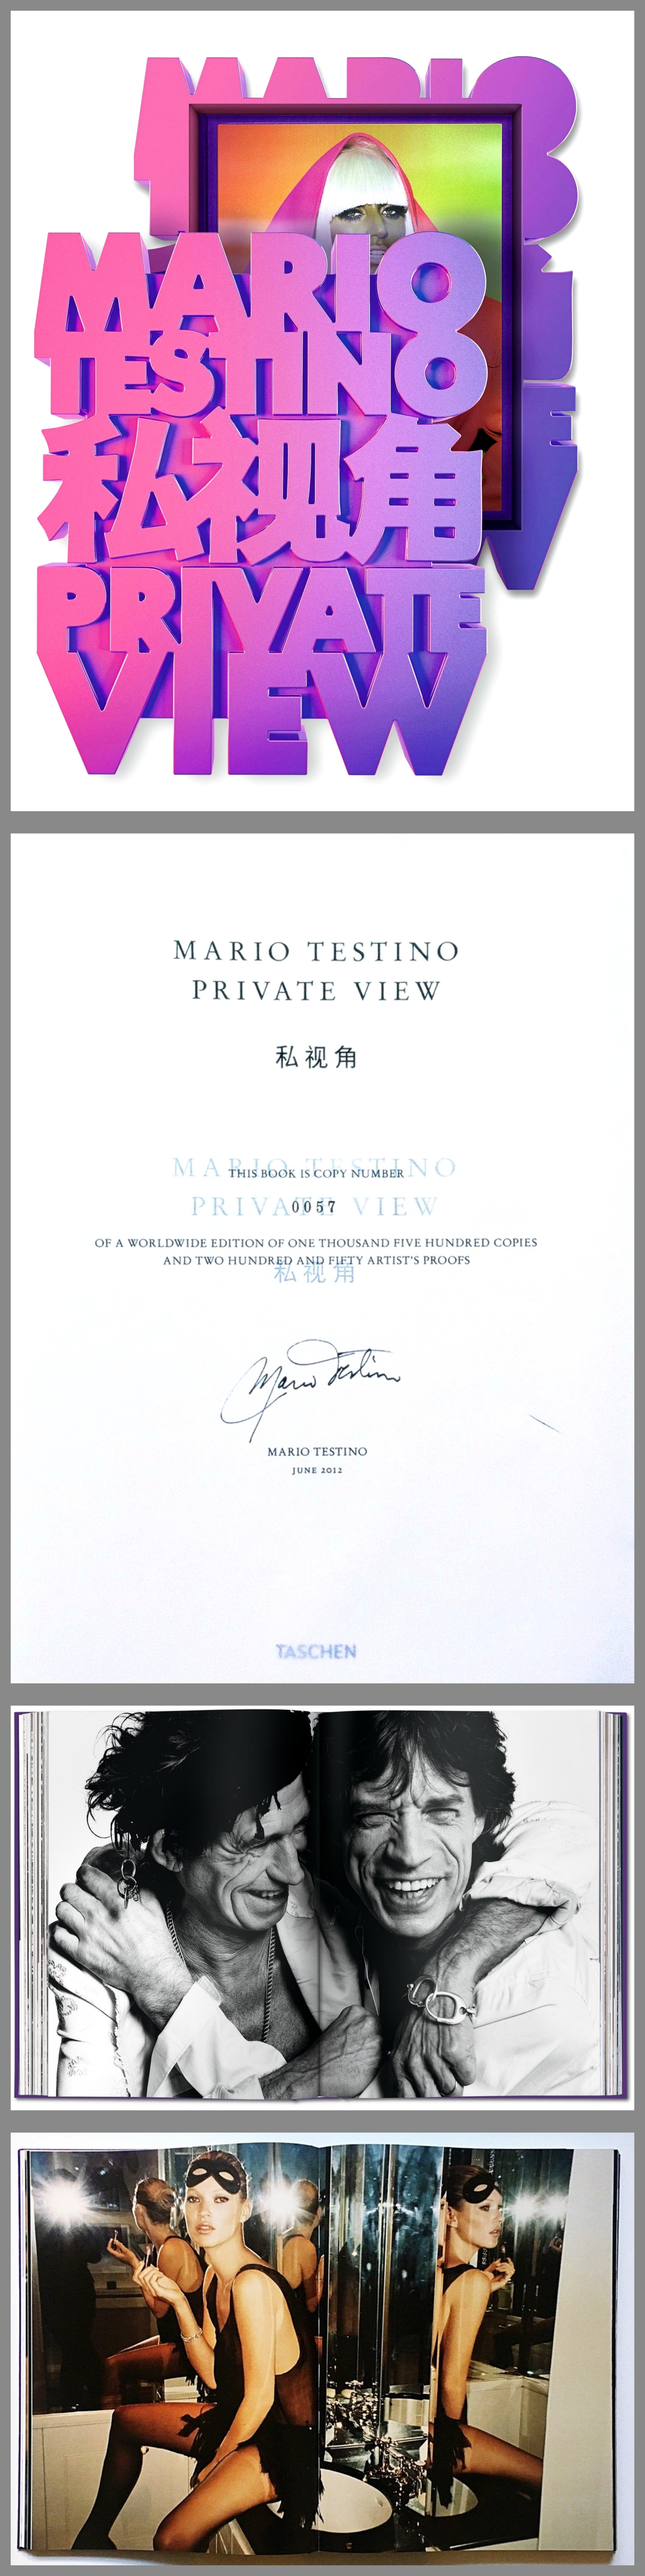 Livre signé à la main : Mario Testino, vue privée biangulaire (chinois-anglais) en vente 17